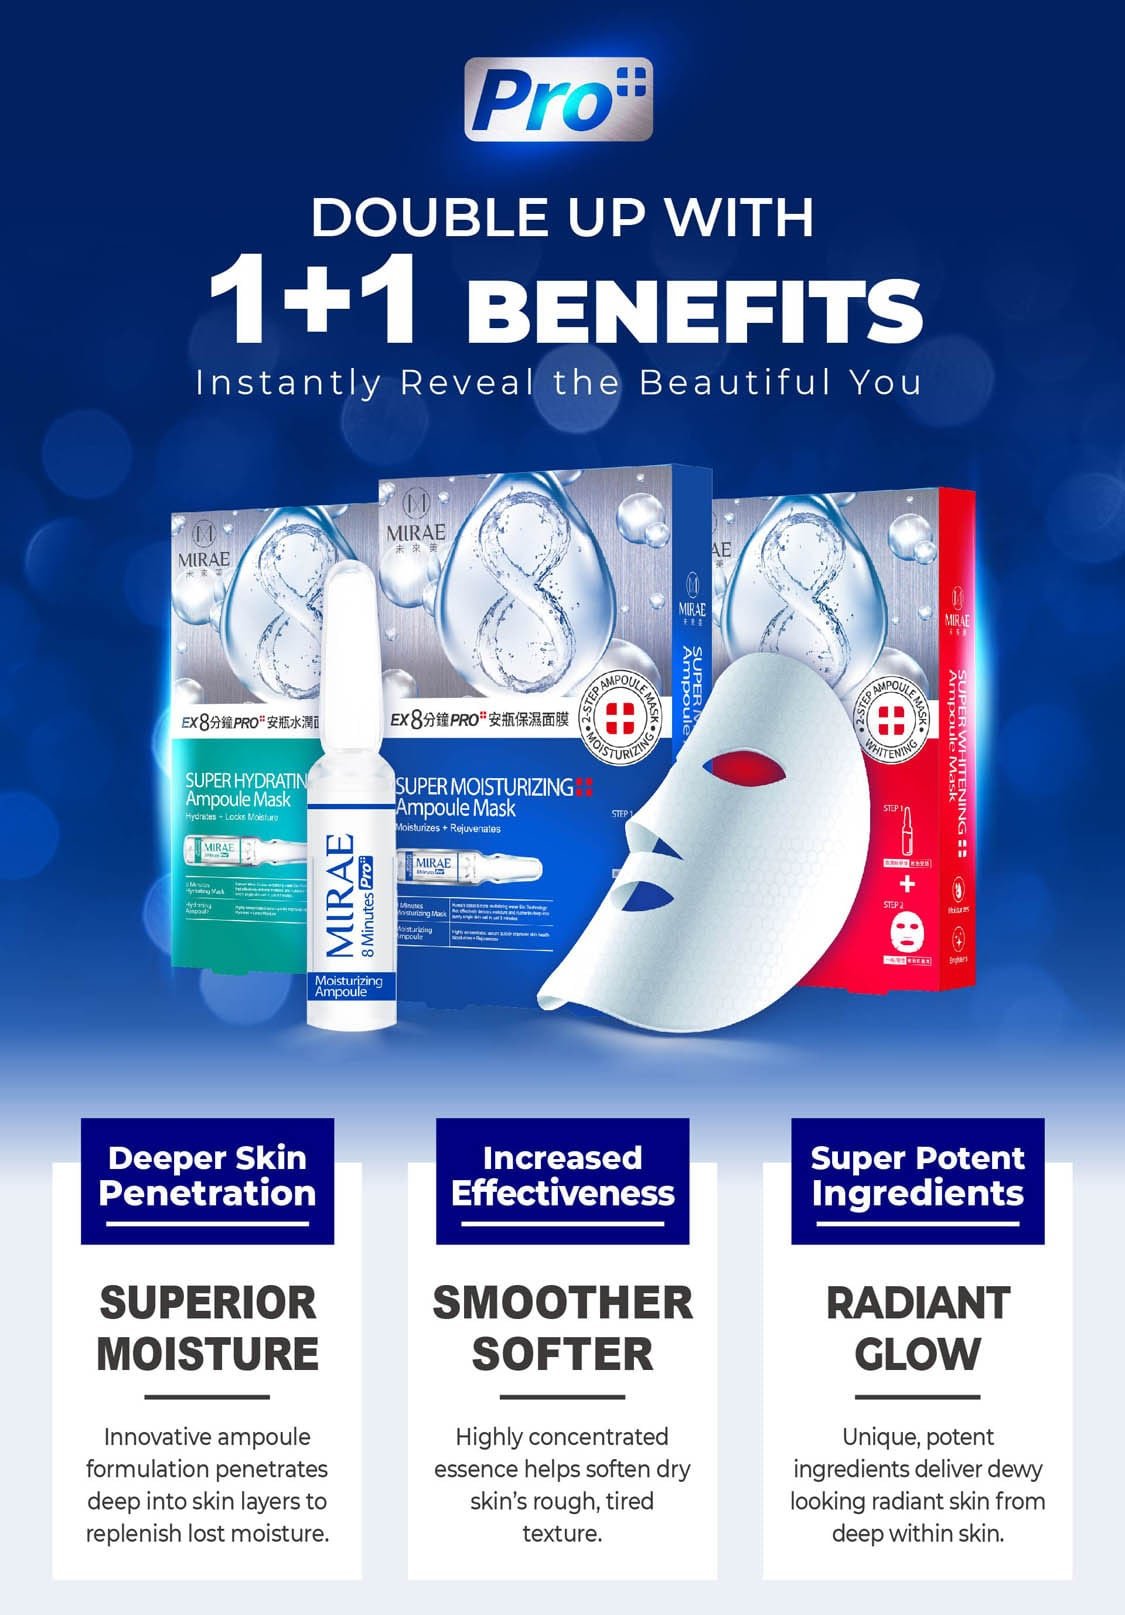 Super Whitening Ampoule Mask - Benefits